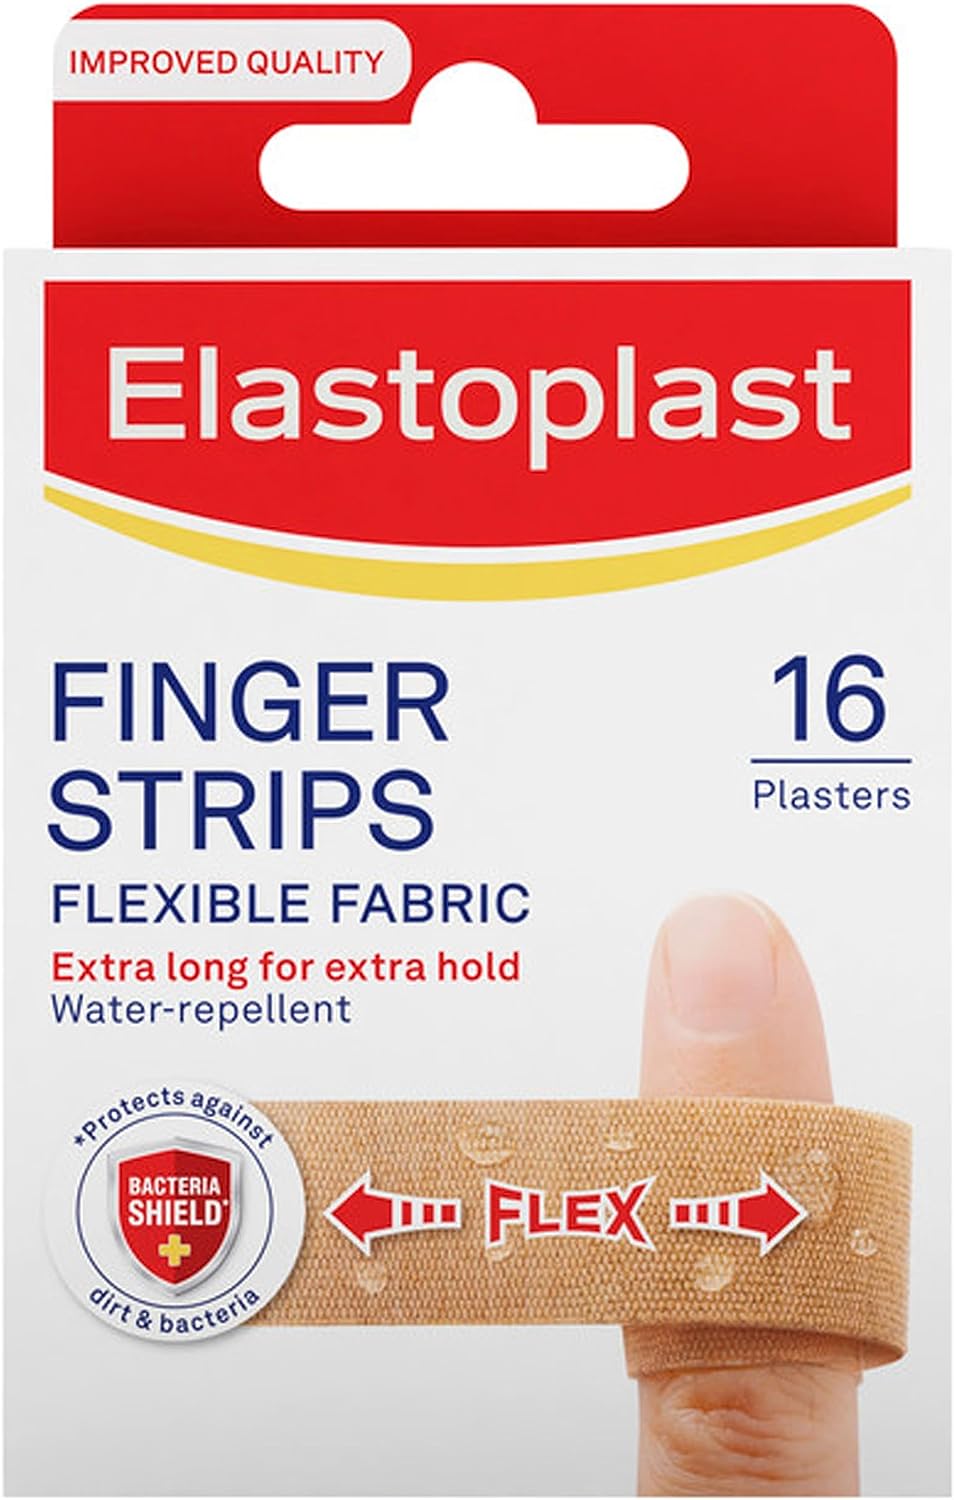 Elastoplast Finger Strip Plasters Flexible Fabric Pack of 16 RRP £2.79 CLEARANCE XL £1.99